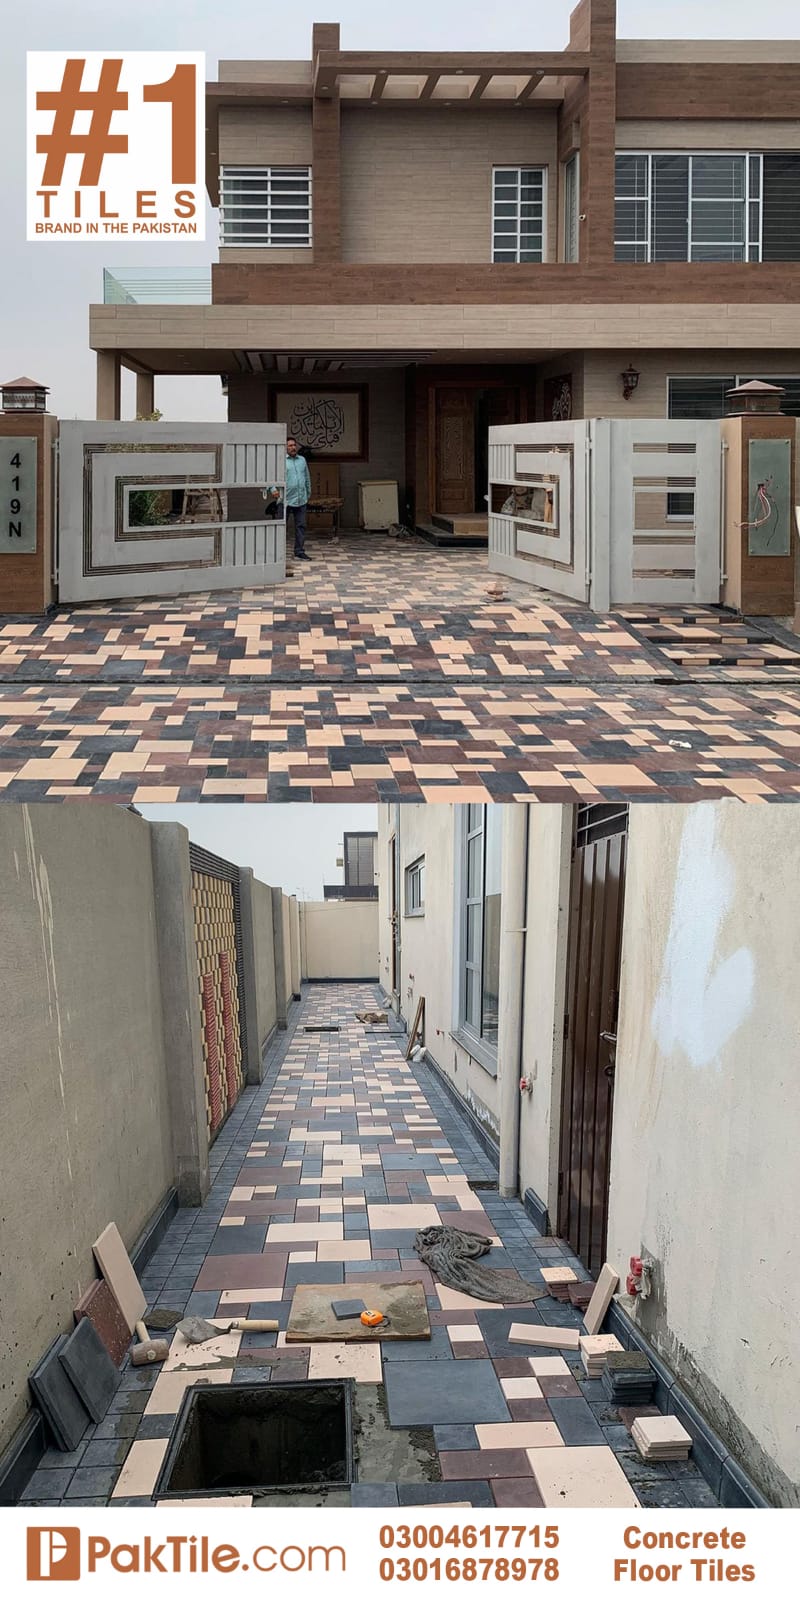 Driveway Floor Tiles Price in Rawalpindi